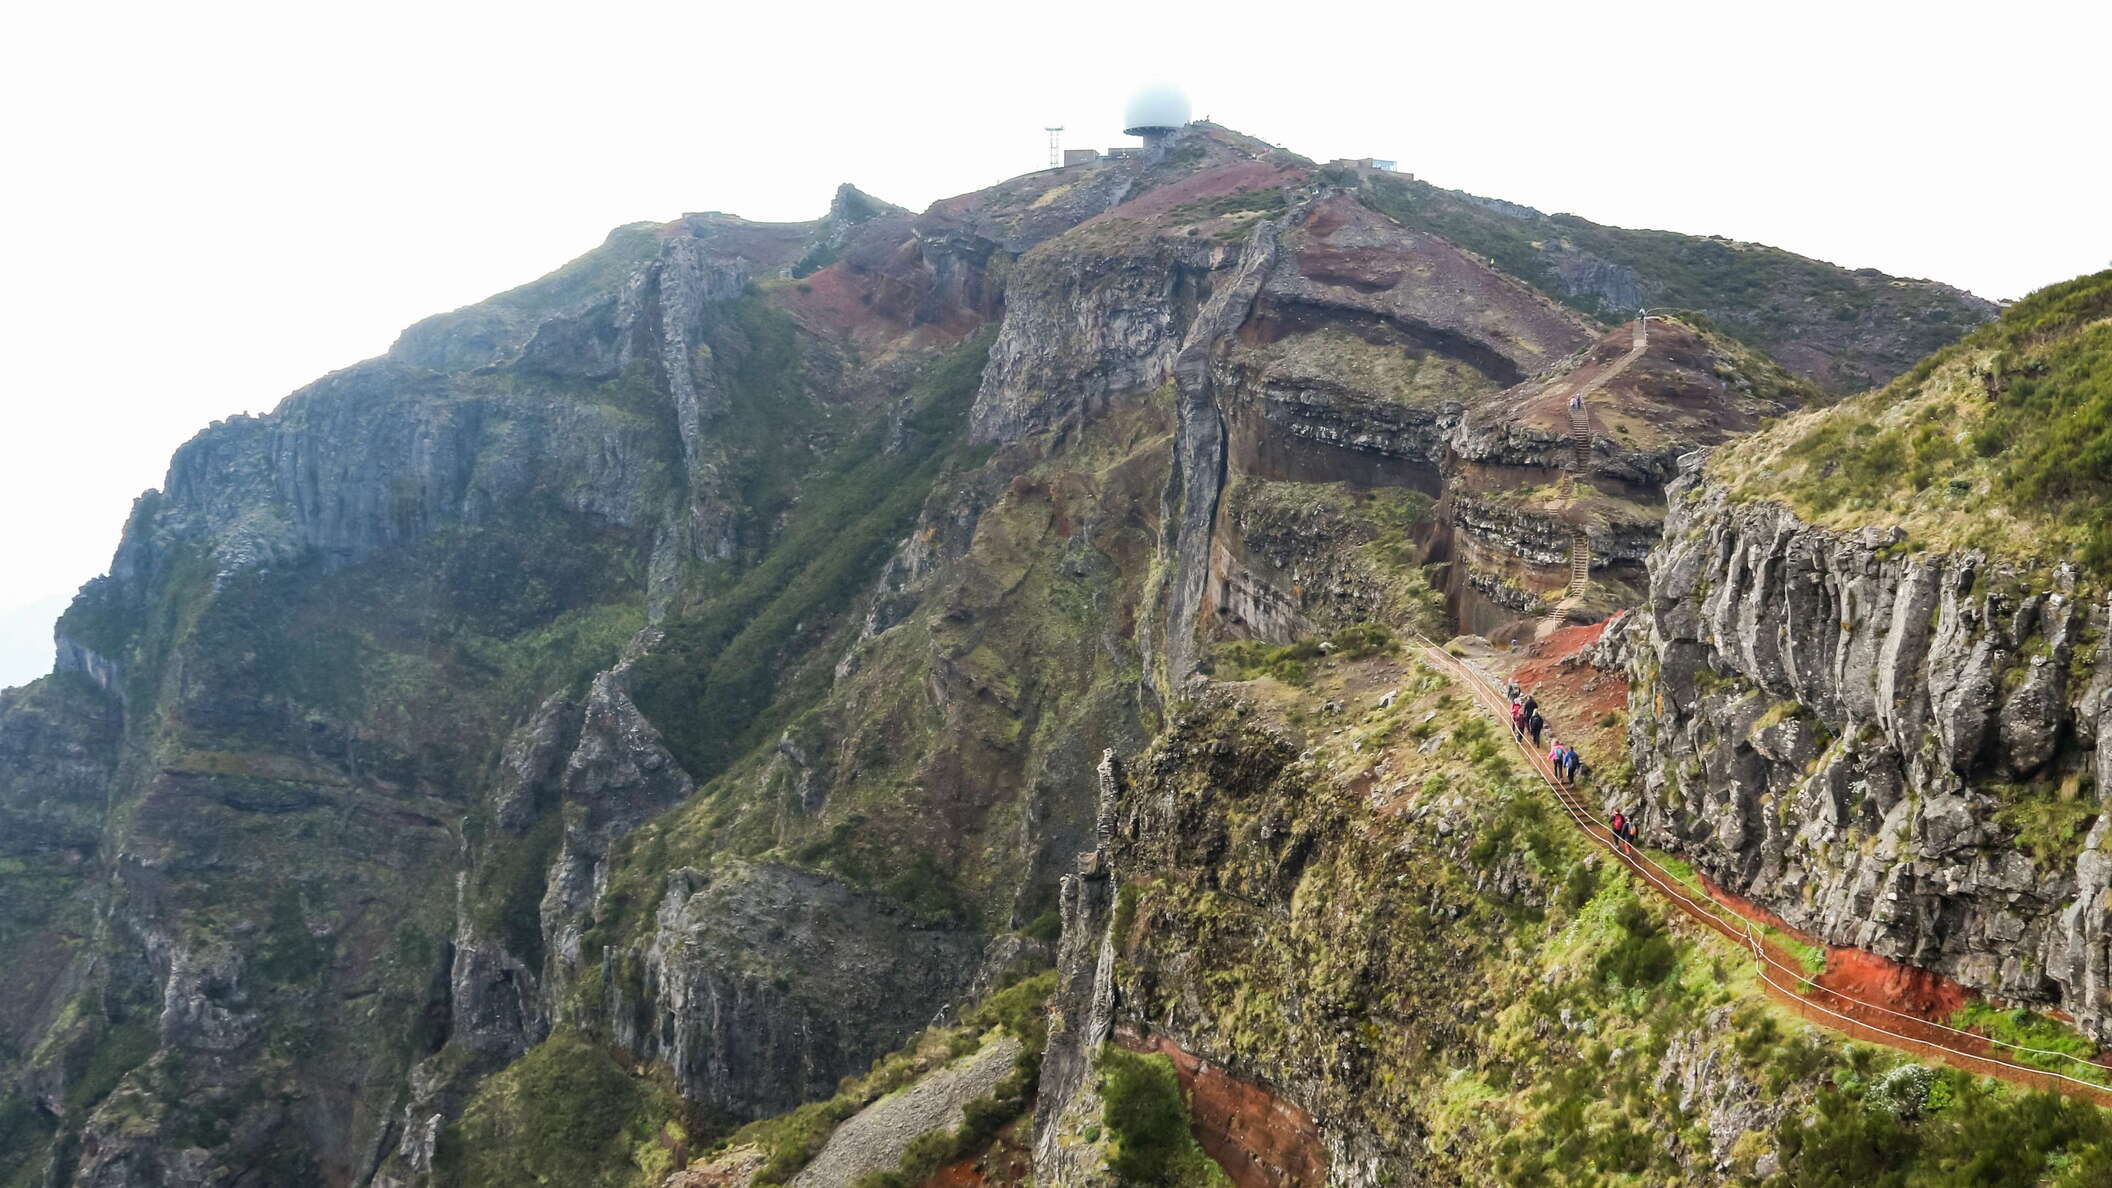 Pico do Arieiro | Volcanic layers and dikes